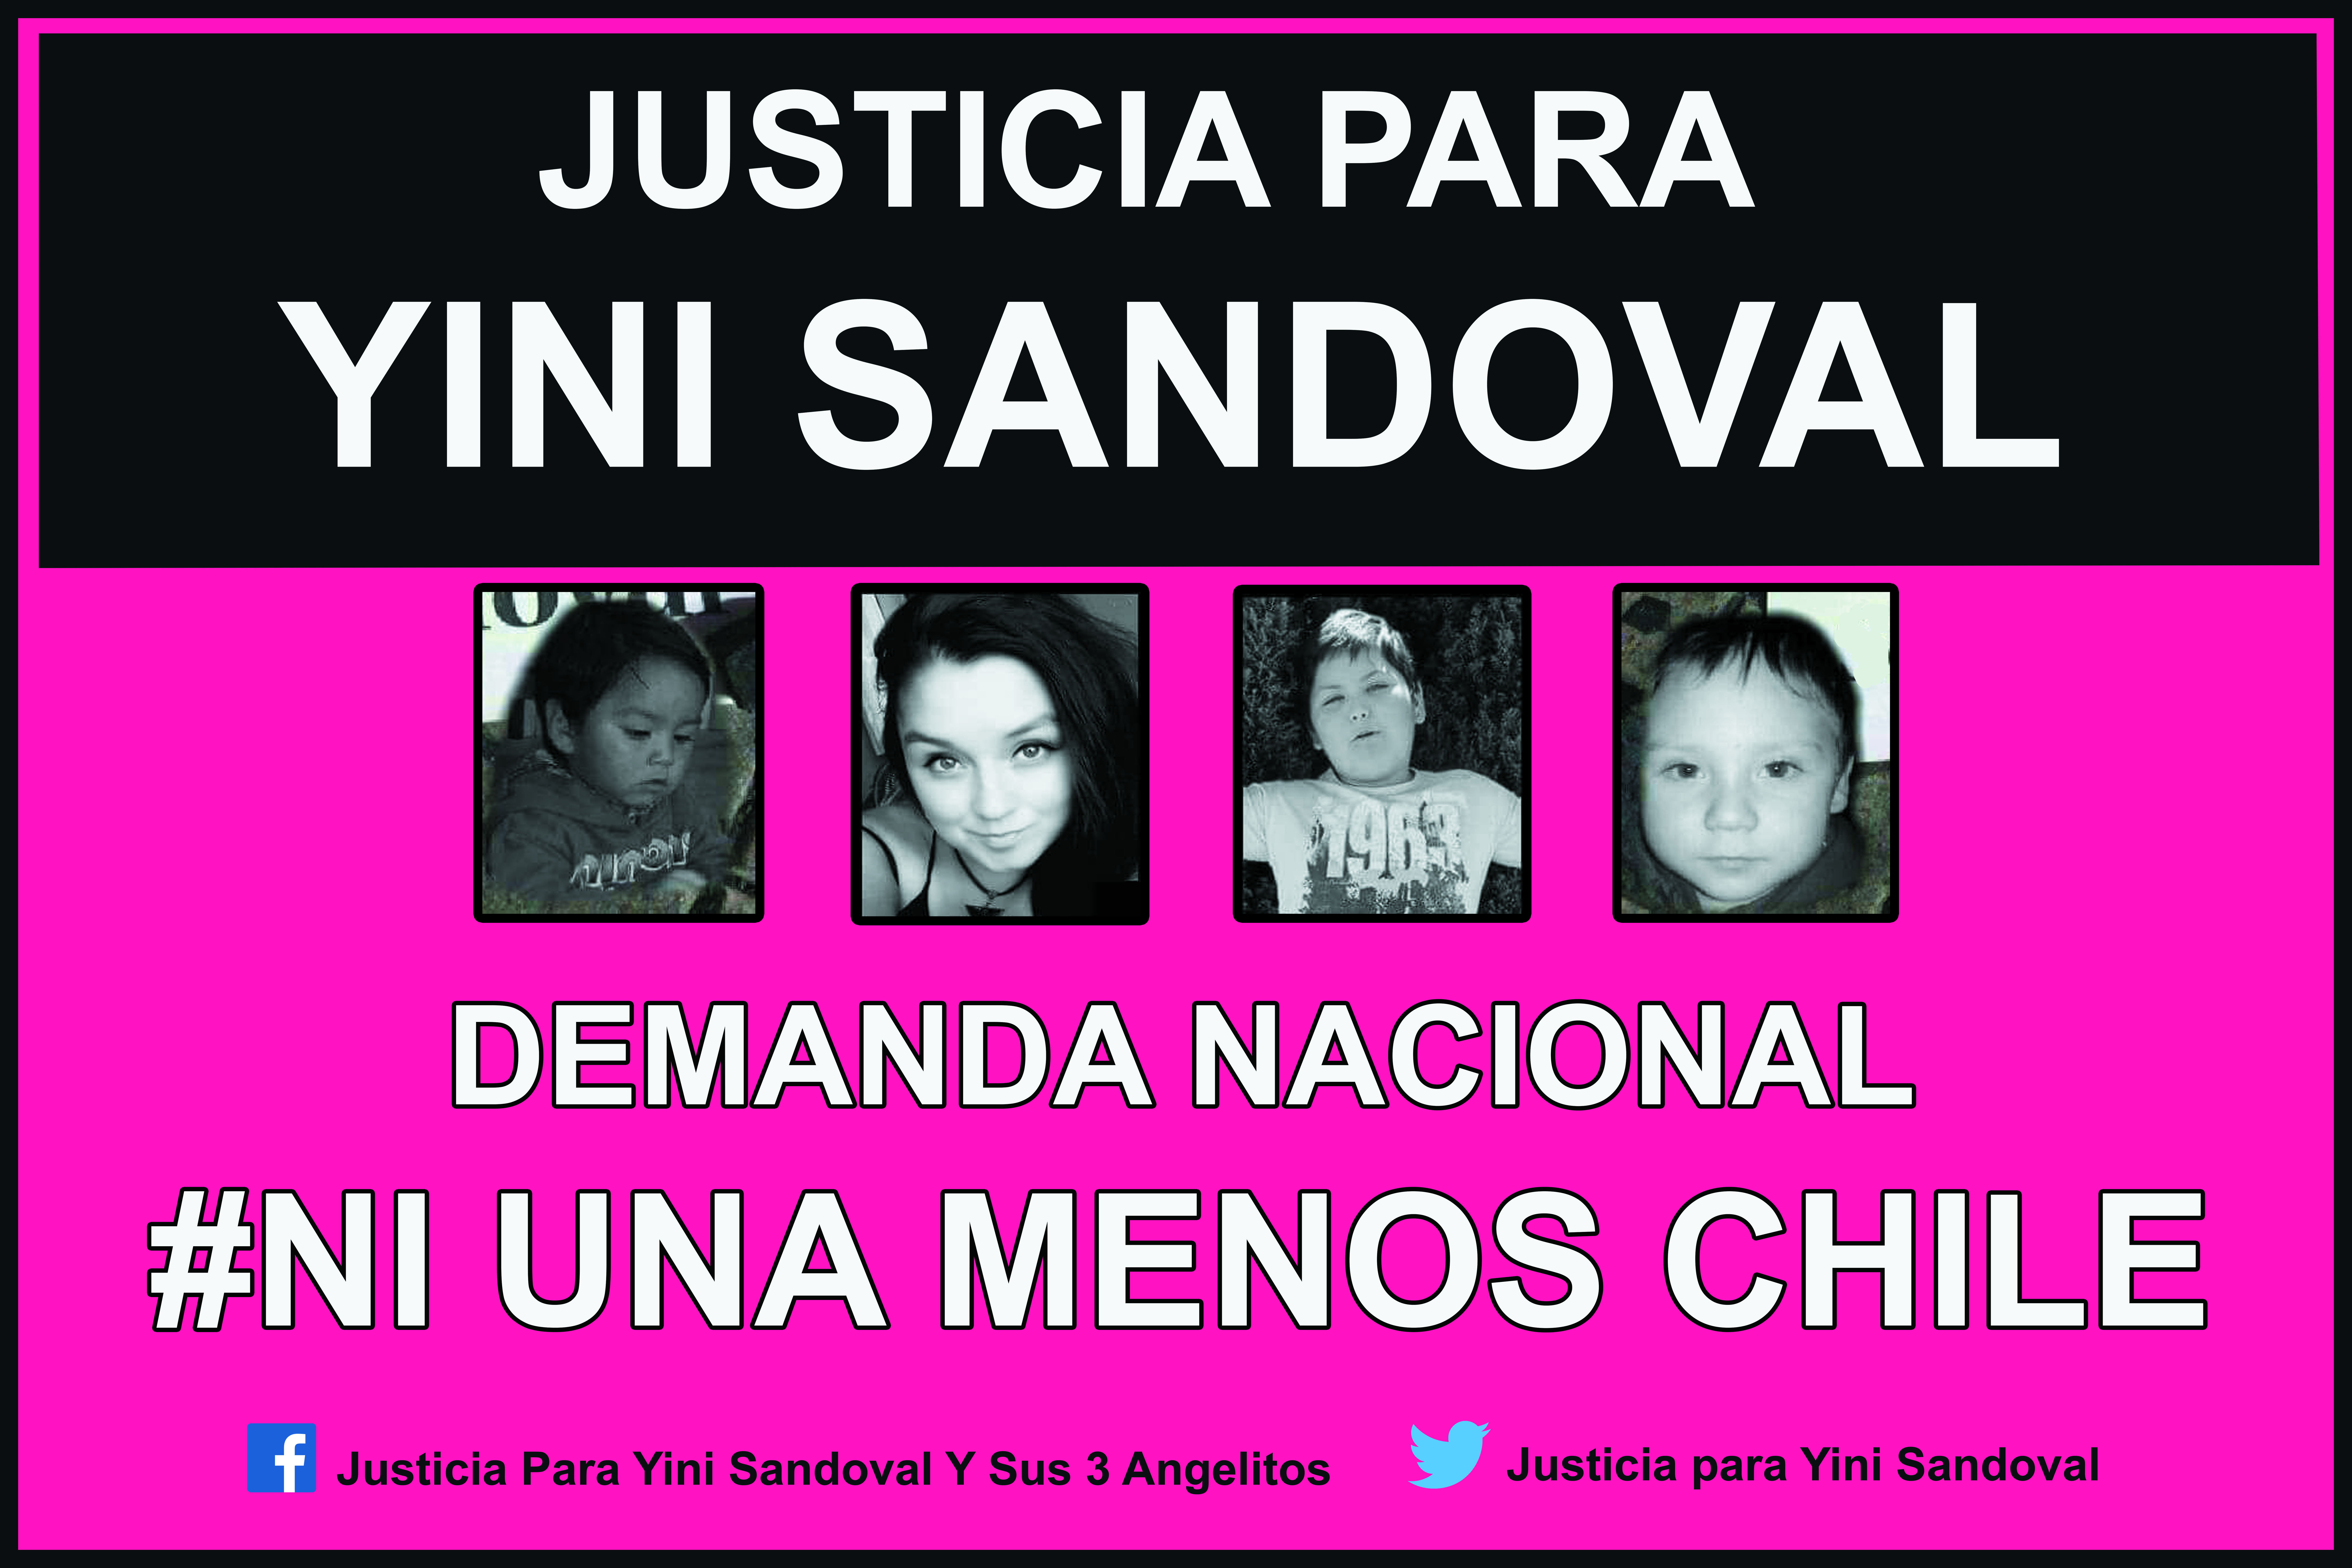 [Comunicado] Campaña #NiUnaMenosChile: Justicia para Yini Sandoval – Demanda Nacional.